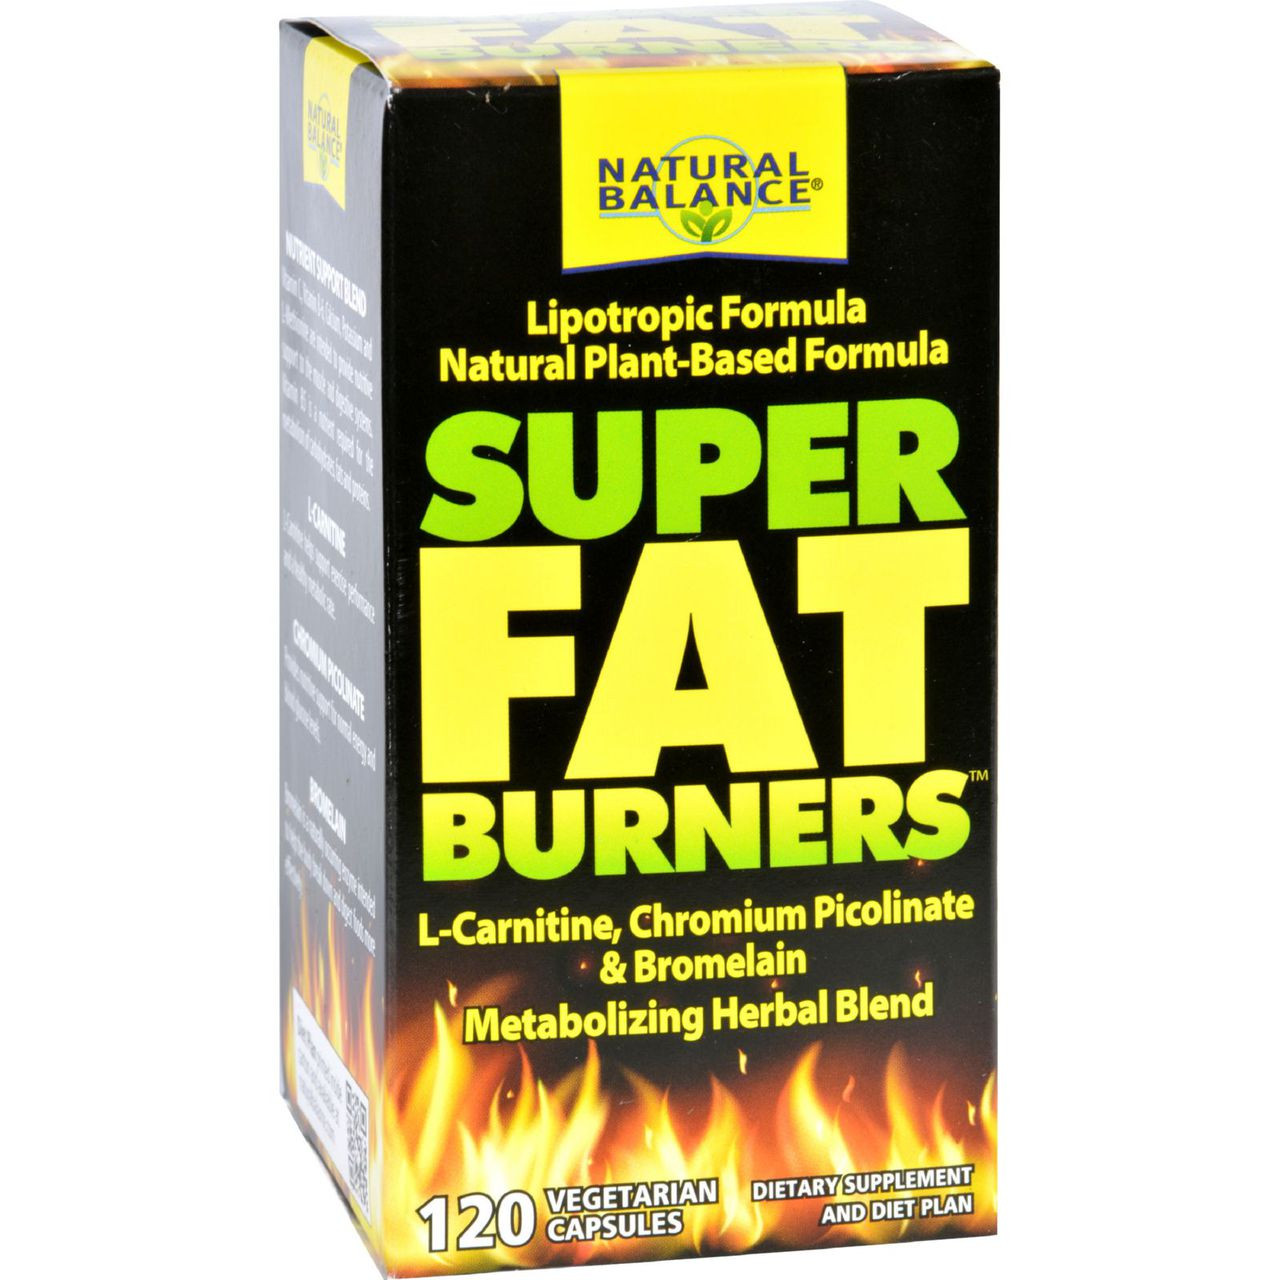 Natural Balance Super Fat Burners 120 Vegetarian Capsules, ECW1703511,  47868227217, Natural Balance